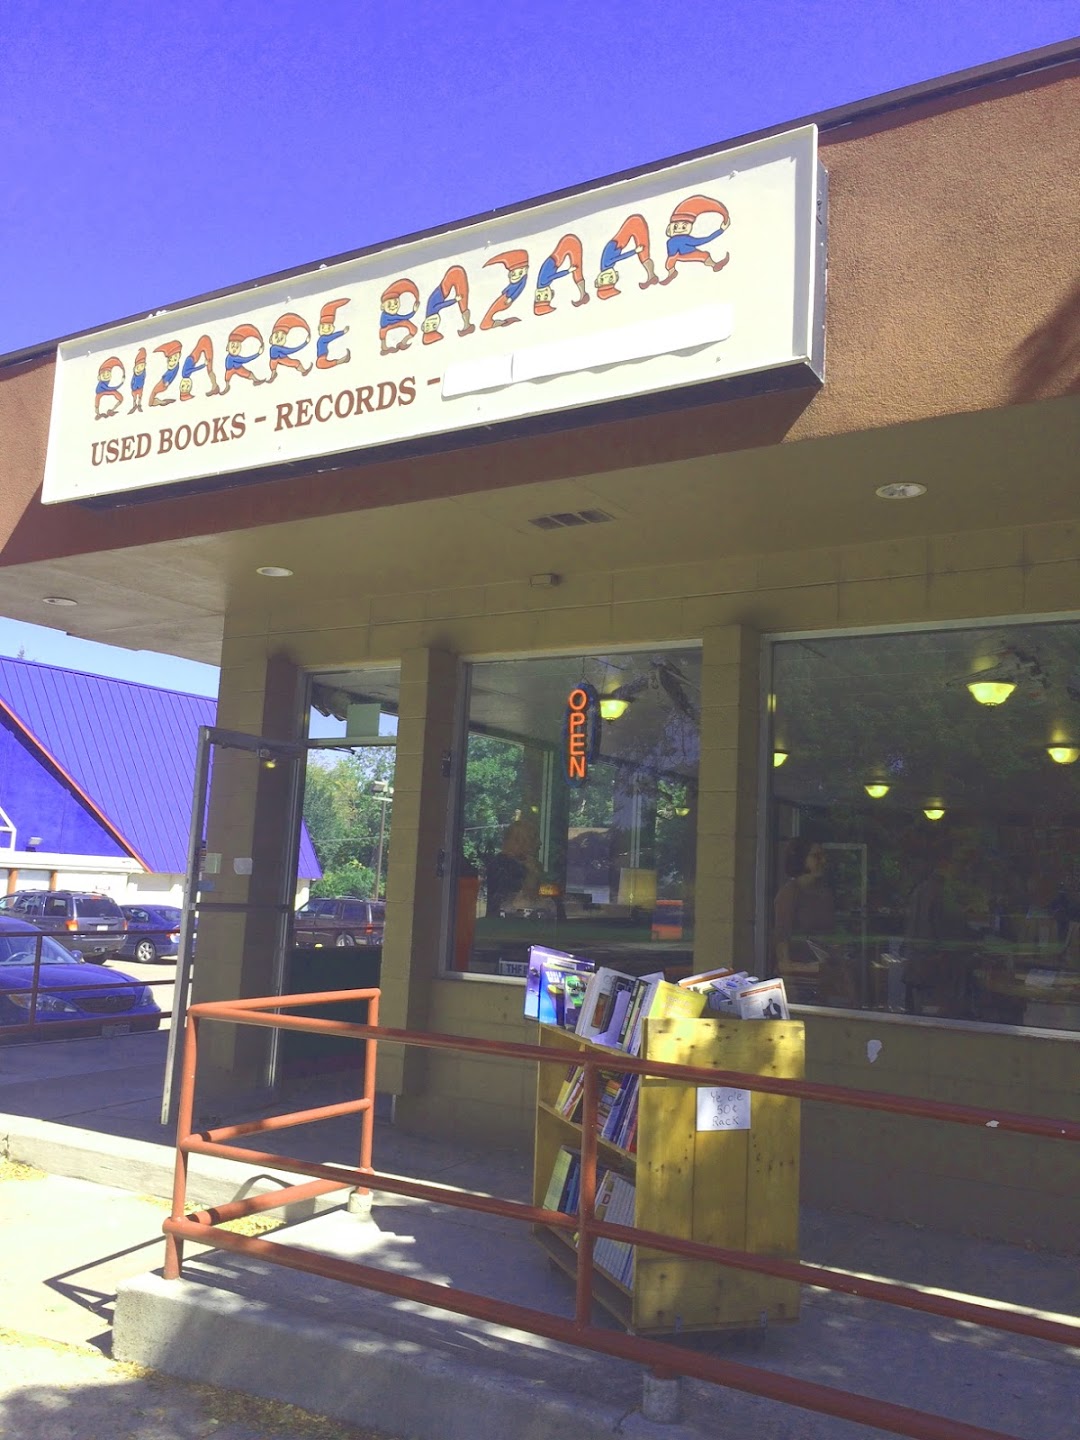 The Bizarre Bazaar LLC